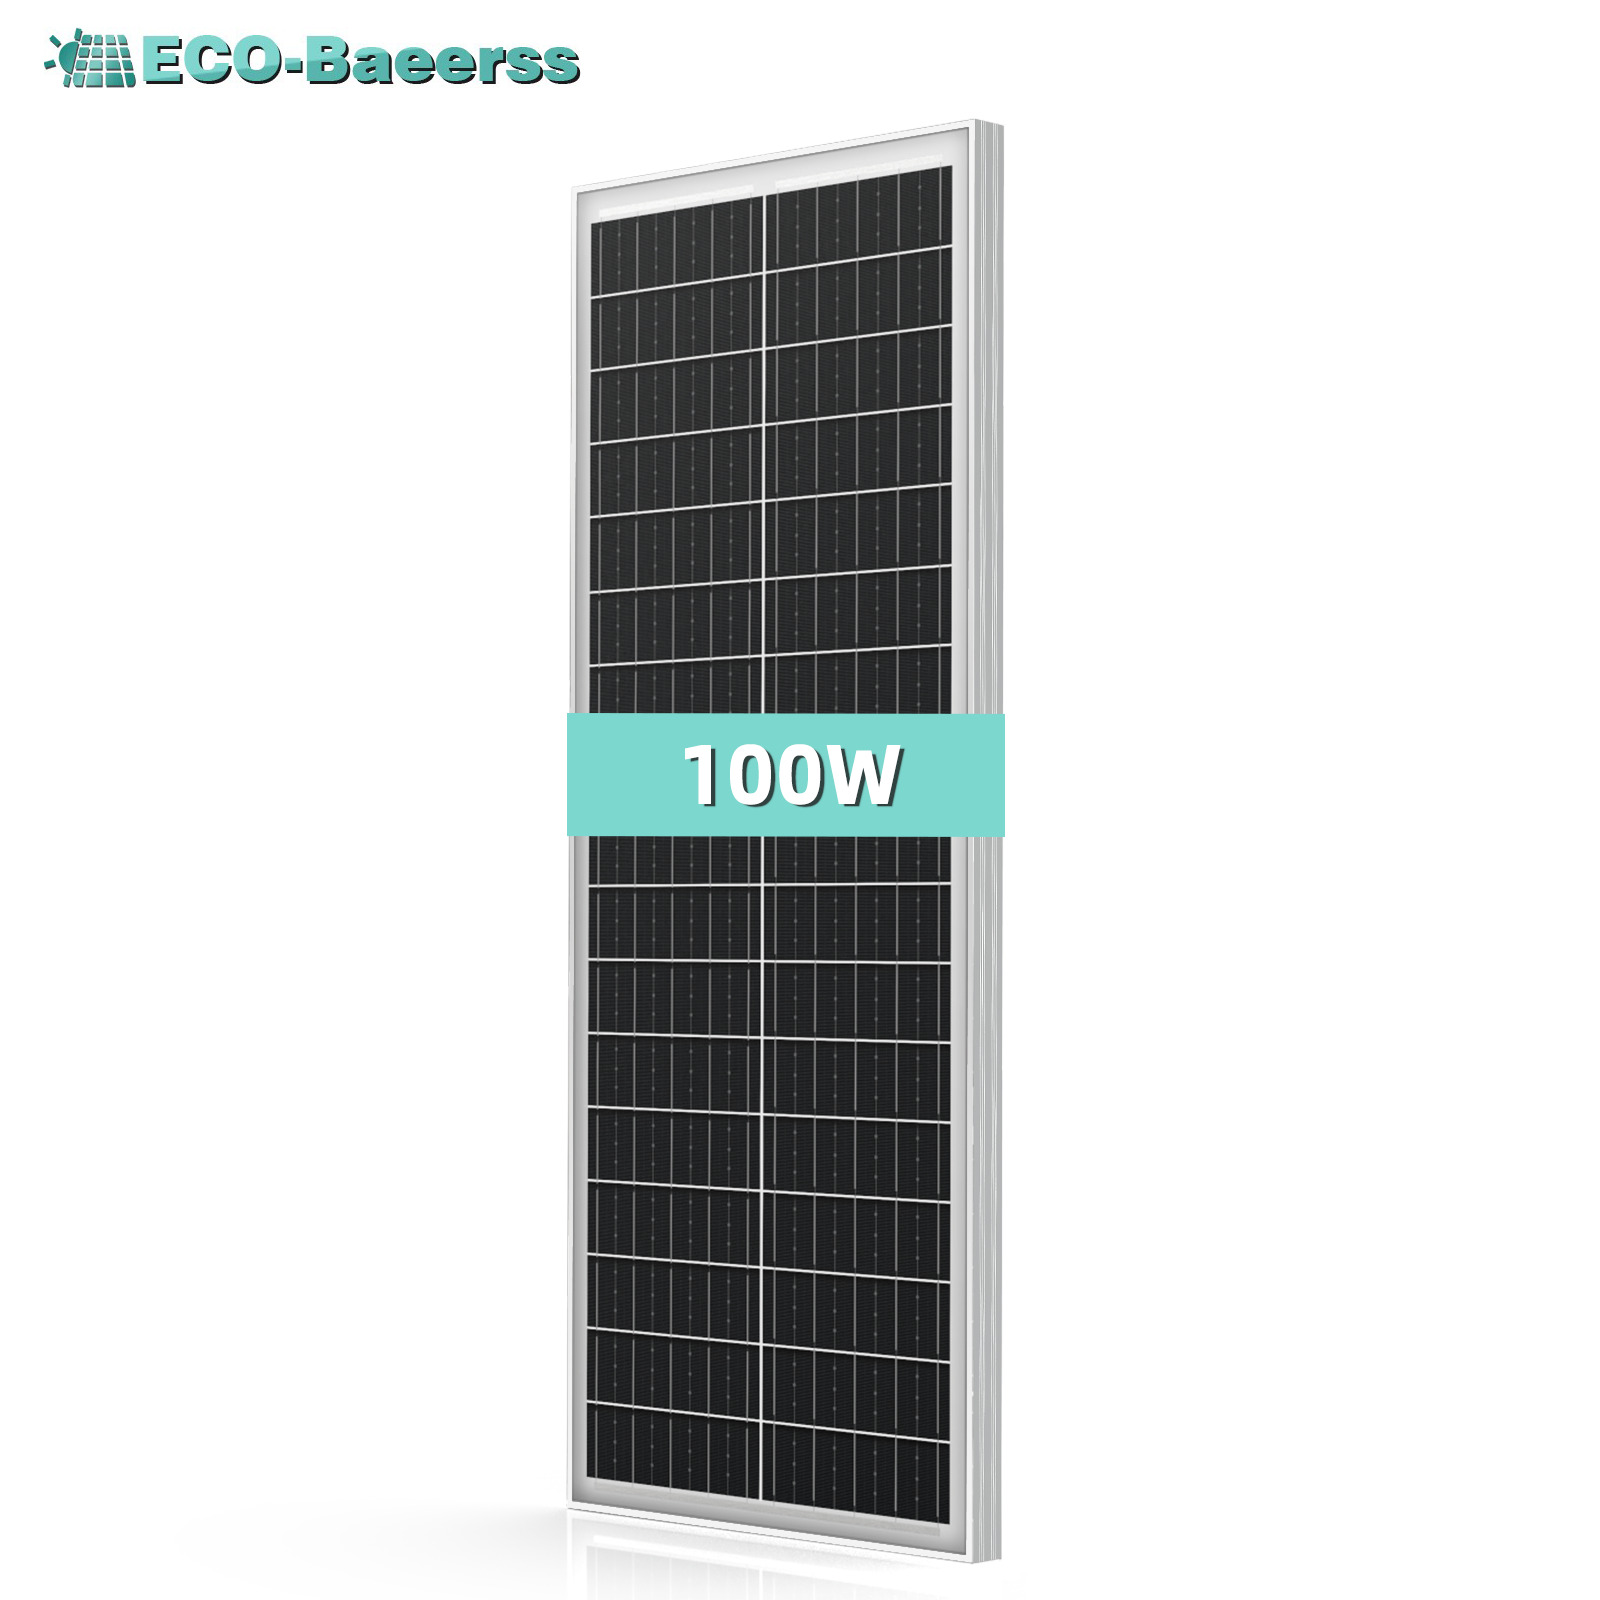 100W 200W 400W 1000Watt 12V Monocrystalline Solar Panel Home RV Camping Off Grid